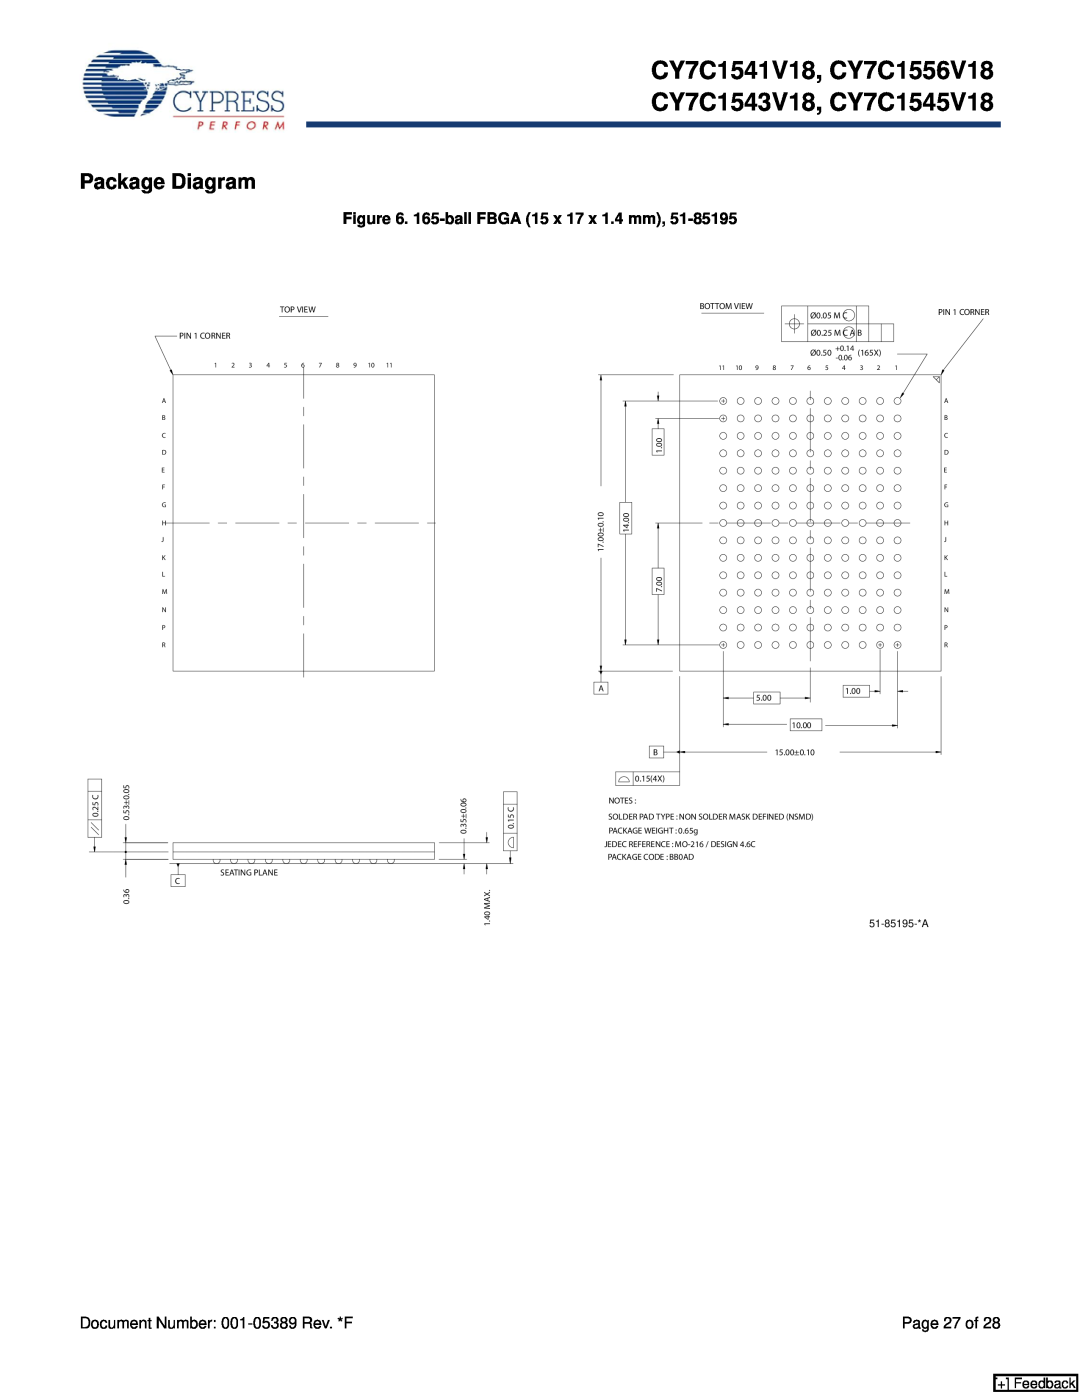 Cypress Package Diagram, CY7C1541V18, CY7C1556V18 CY7C1543V18, CY7C1545V18, 165-ball FBGA 15 x 17 x 1.4 mm, + Feedback 